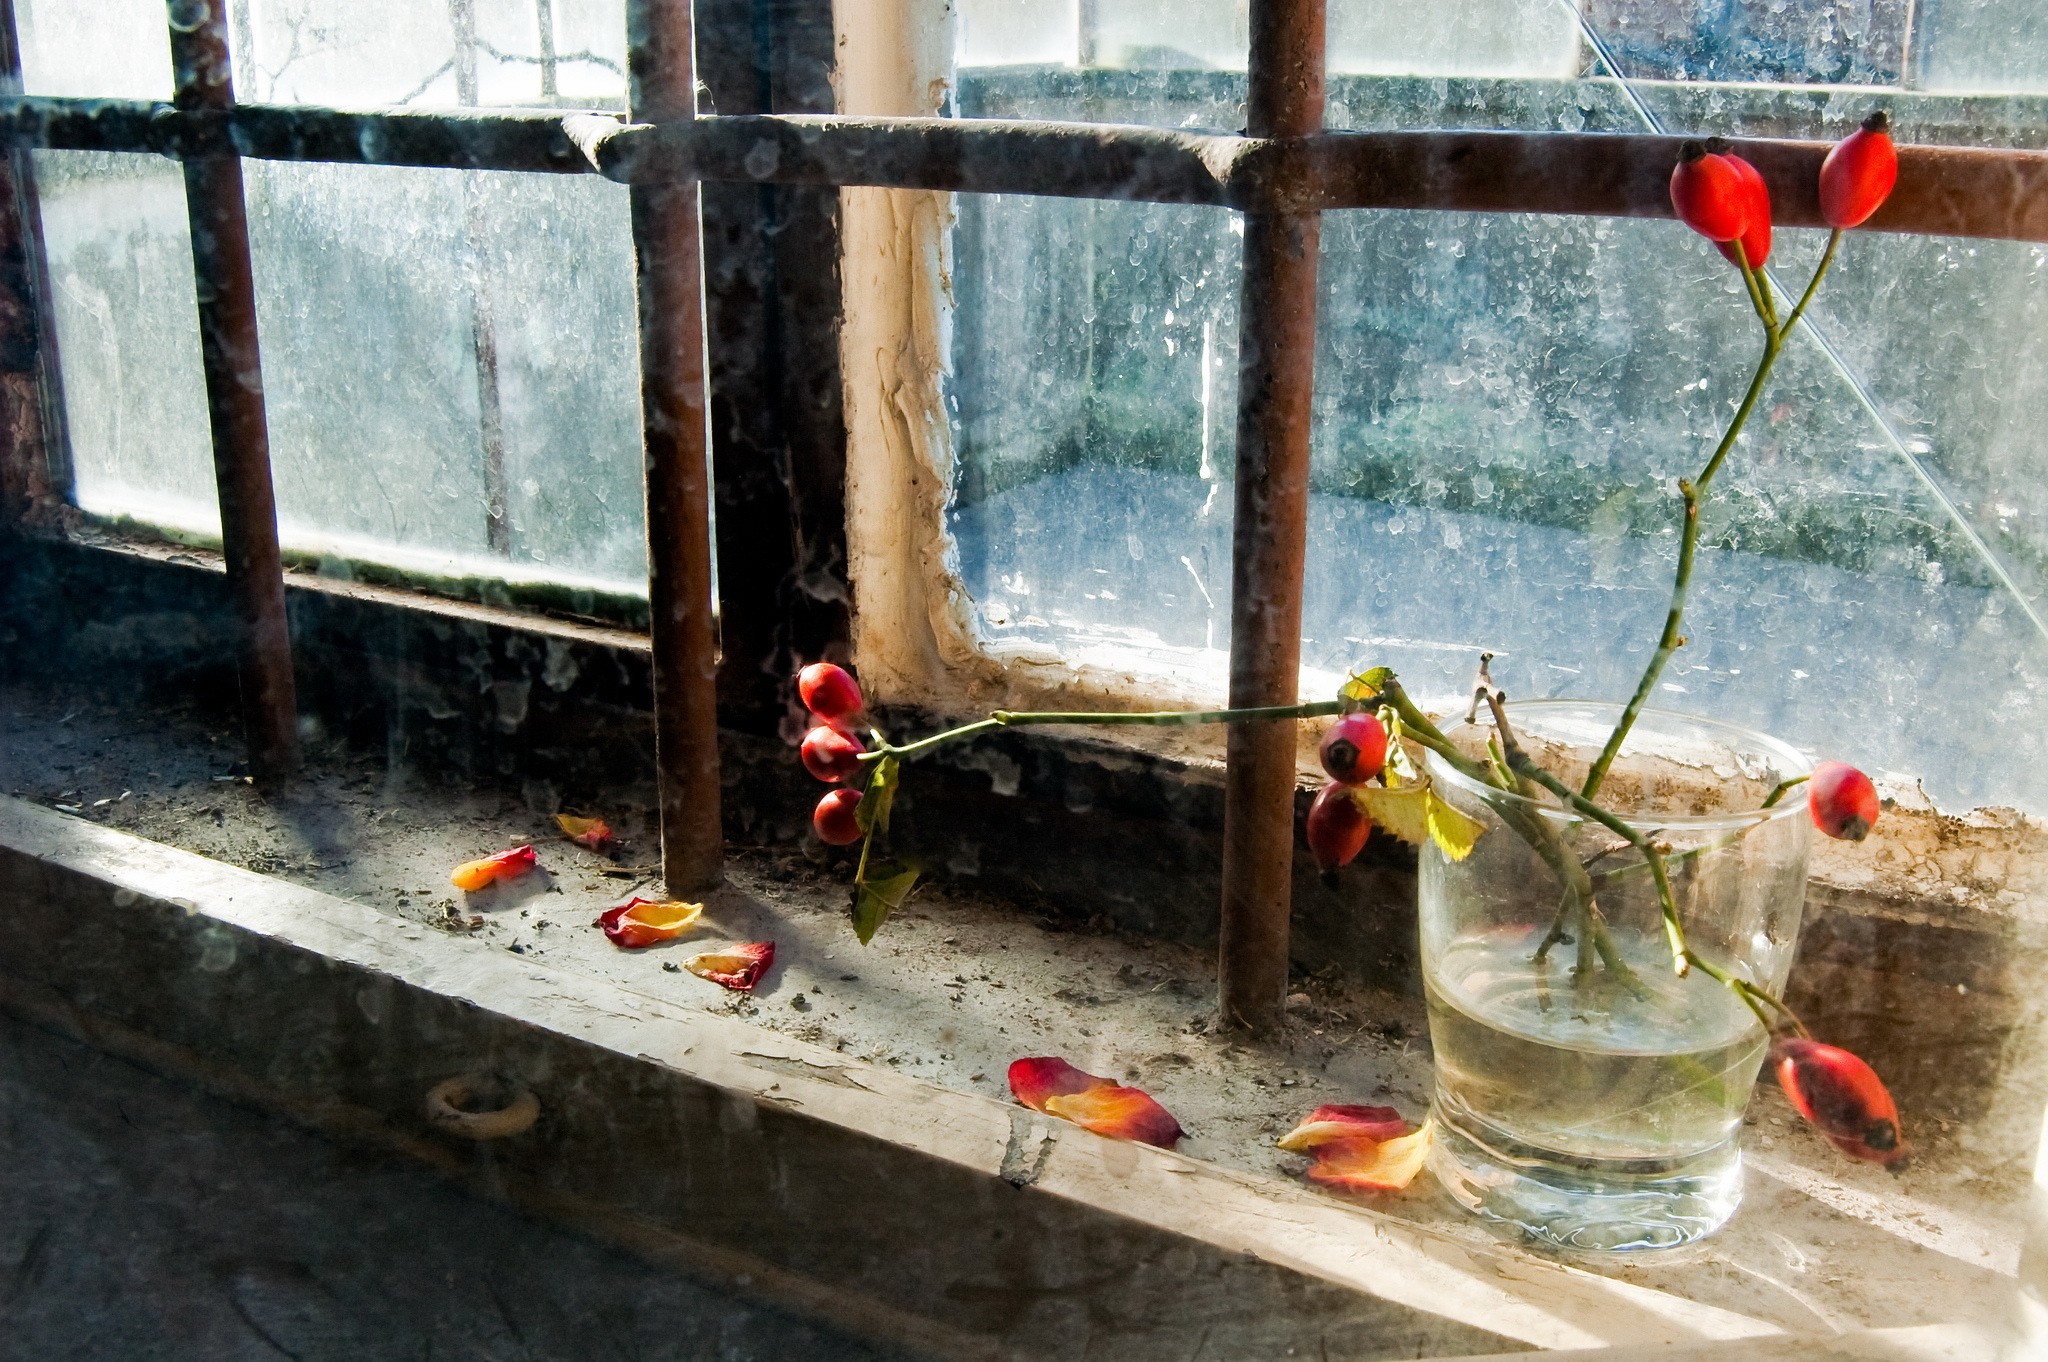 General 2048x1362 window flowers plants ruins abandoned glass metal indoors